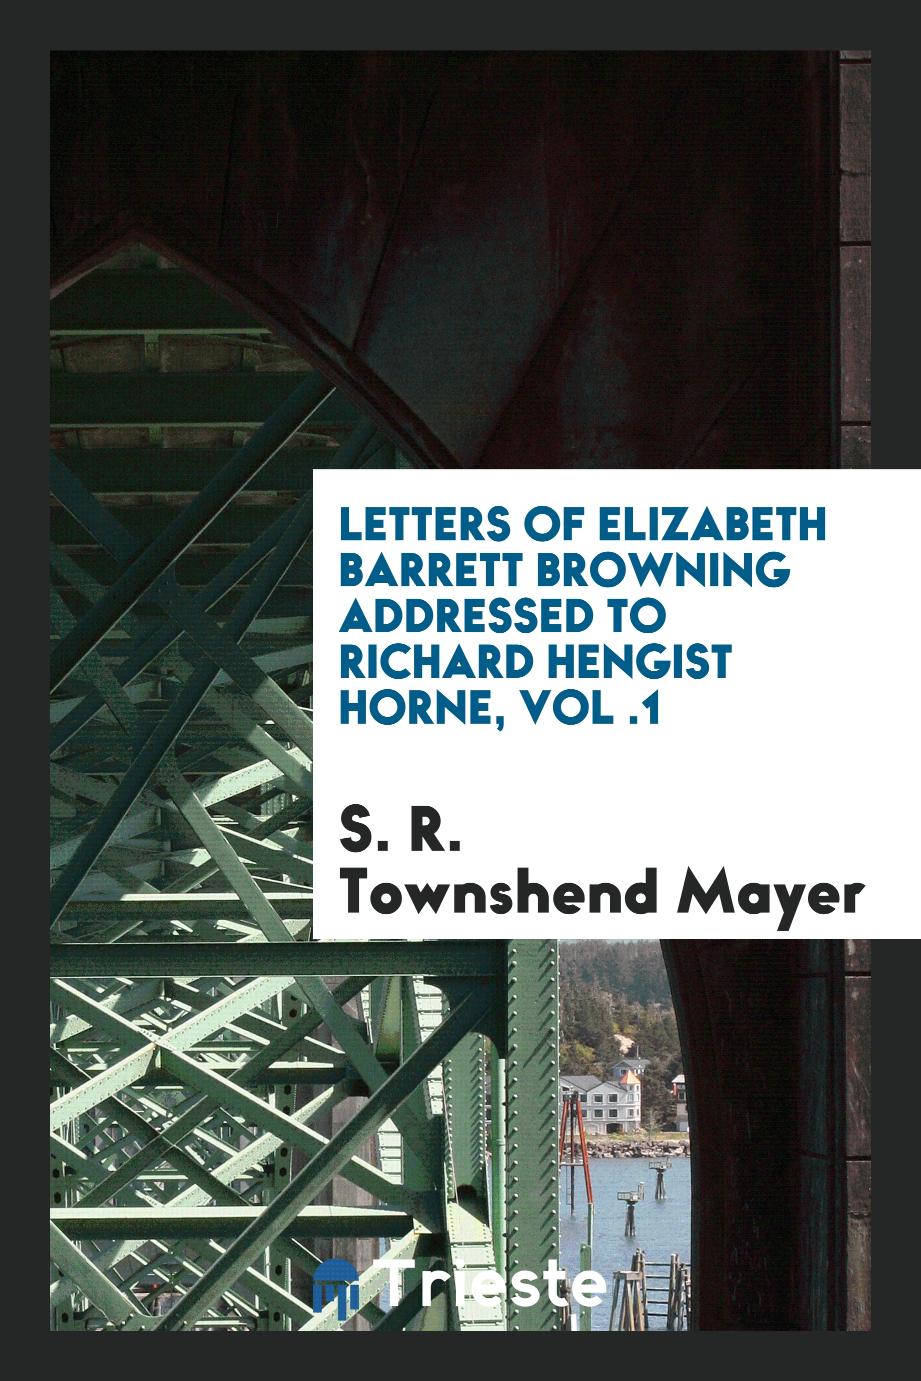 Letters of Elizabeth Barrett Browning addressed to Richard Hengist Horne, Vol .1